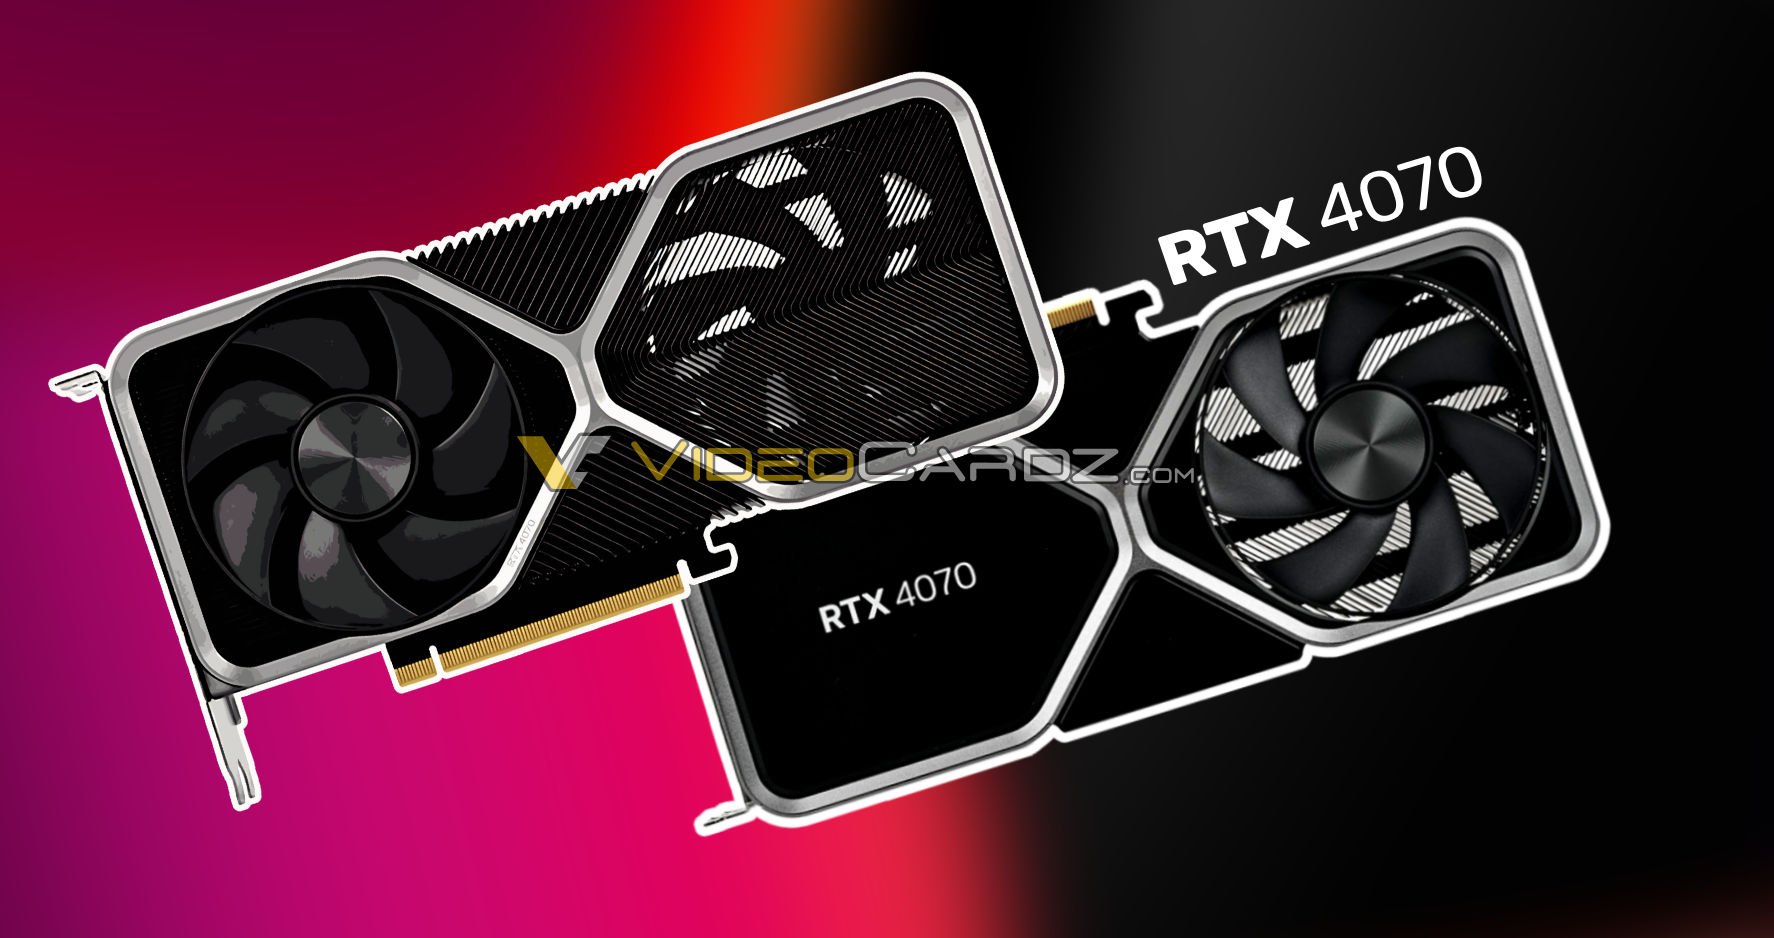 Attēlā redzams NVIDIA GeForce RTX 4070 Founders Edition GPU